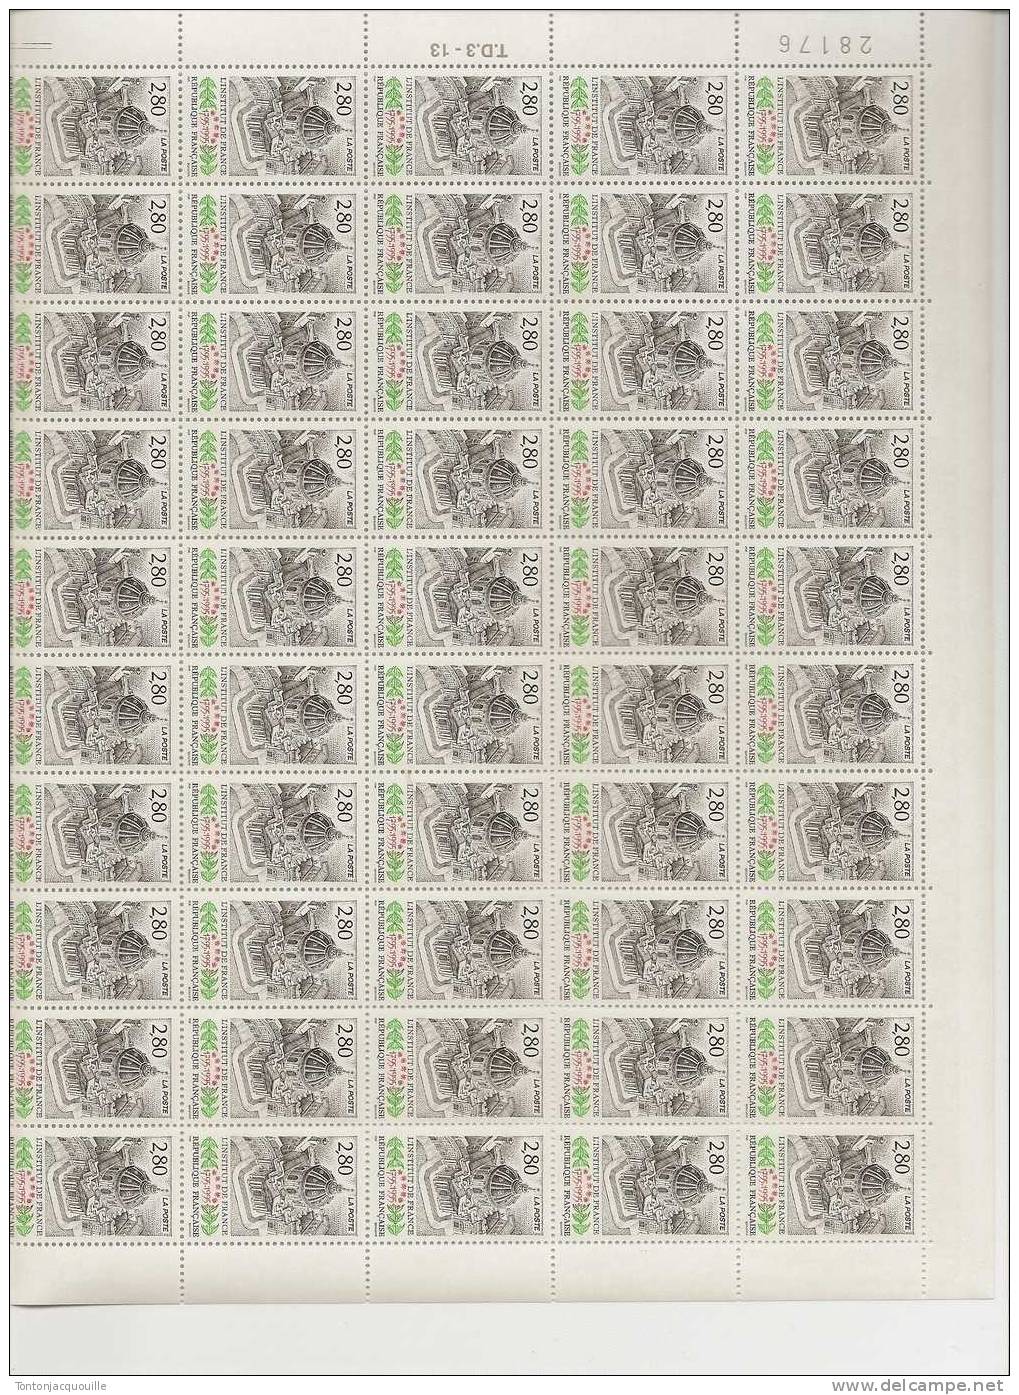 L'INSTITUT DE FRANCE  1795-1995 ++   FEUILLE DE 50 TIMBRES  A  2,80 - Full Sheets